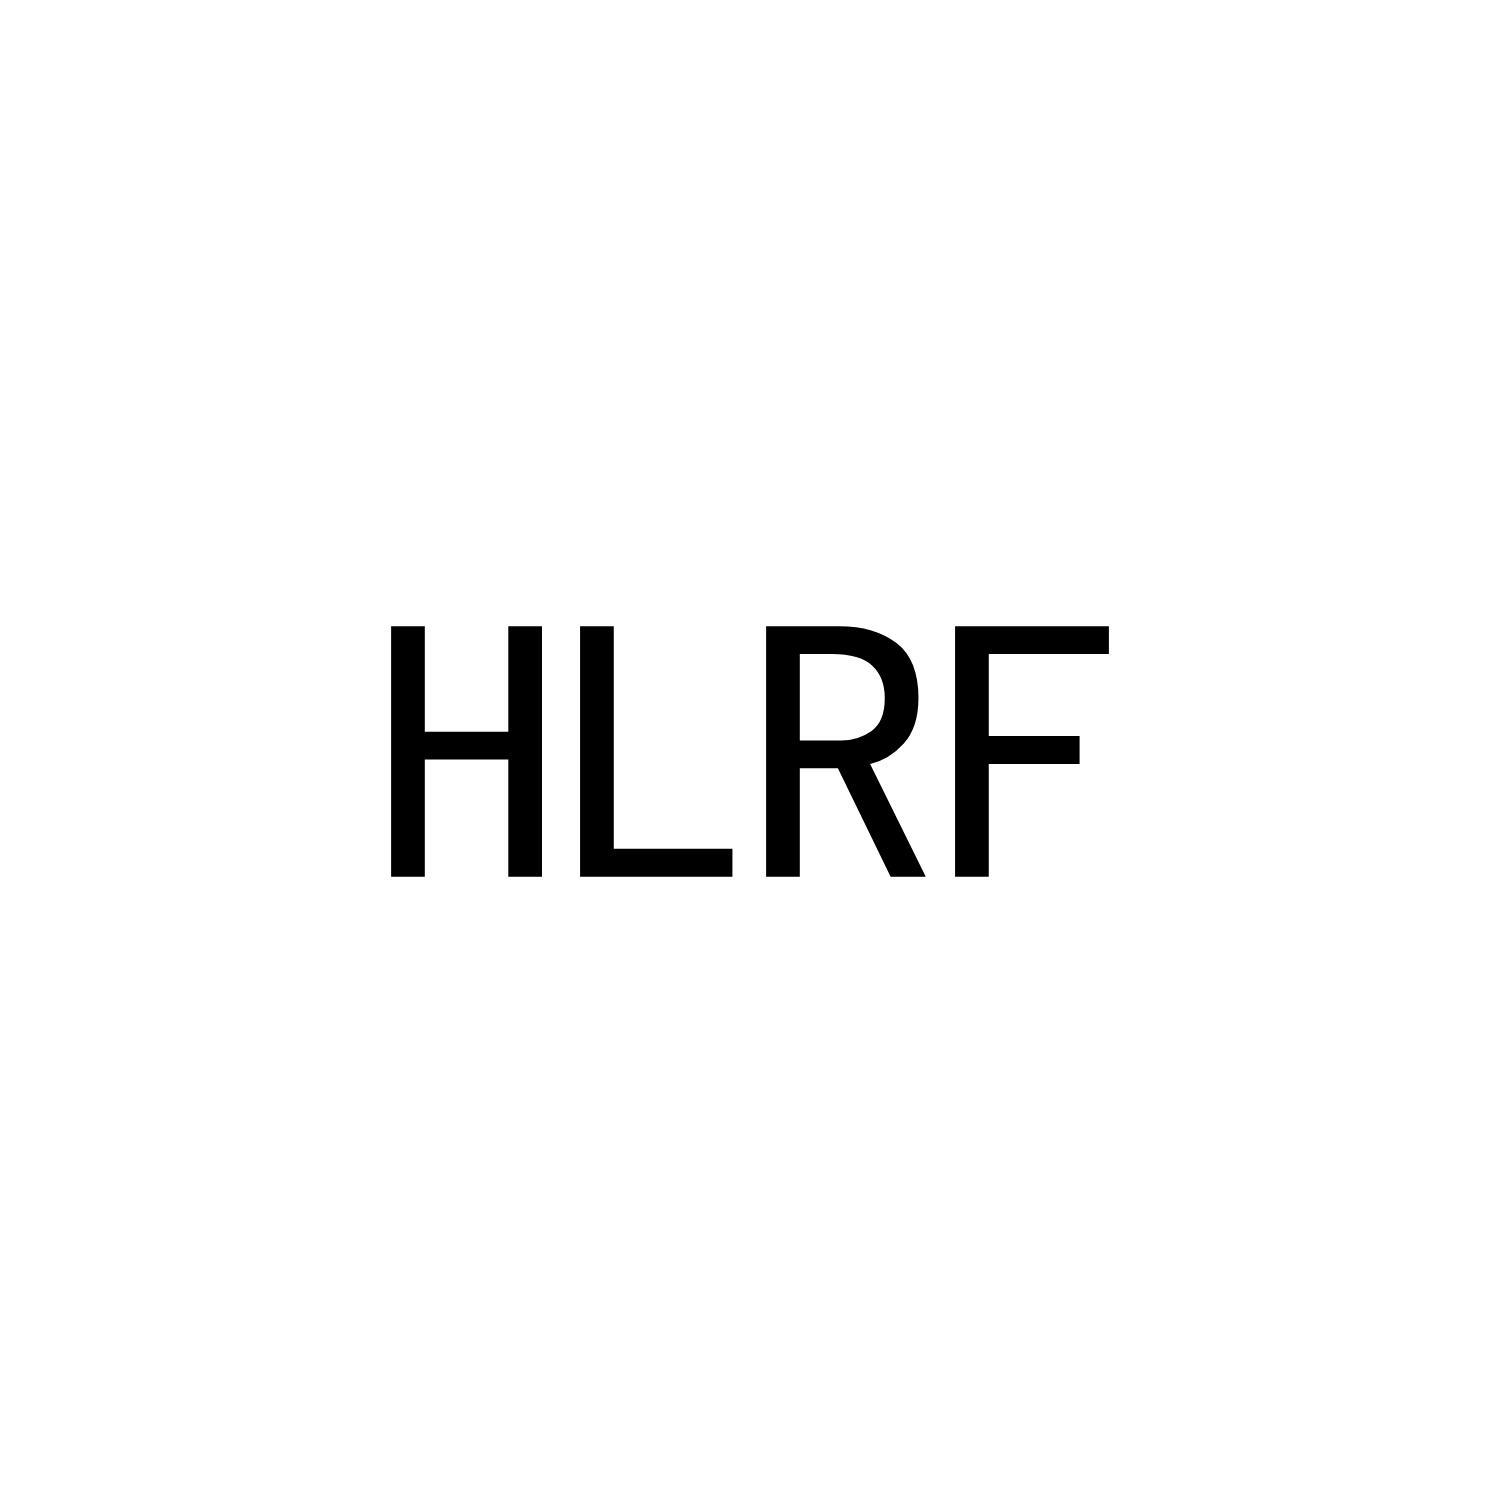 HLRF